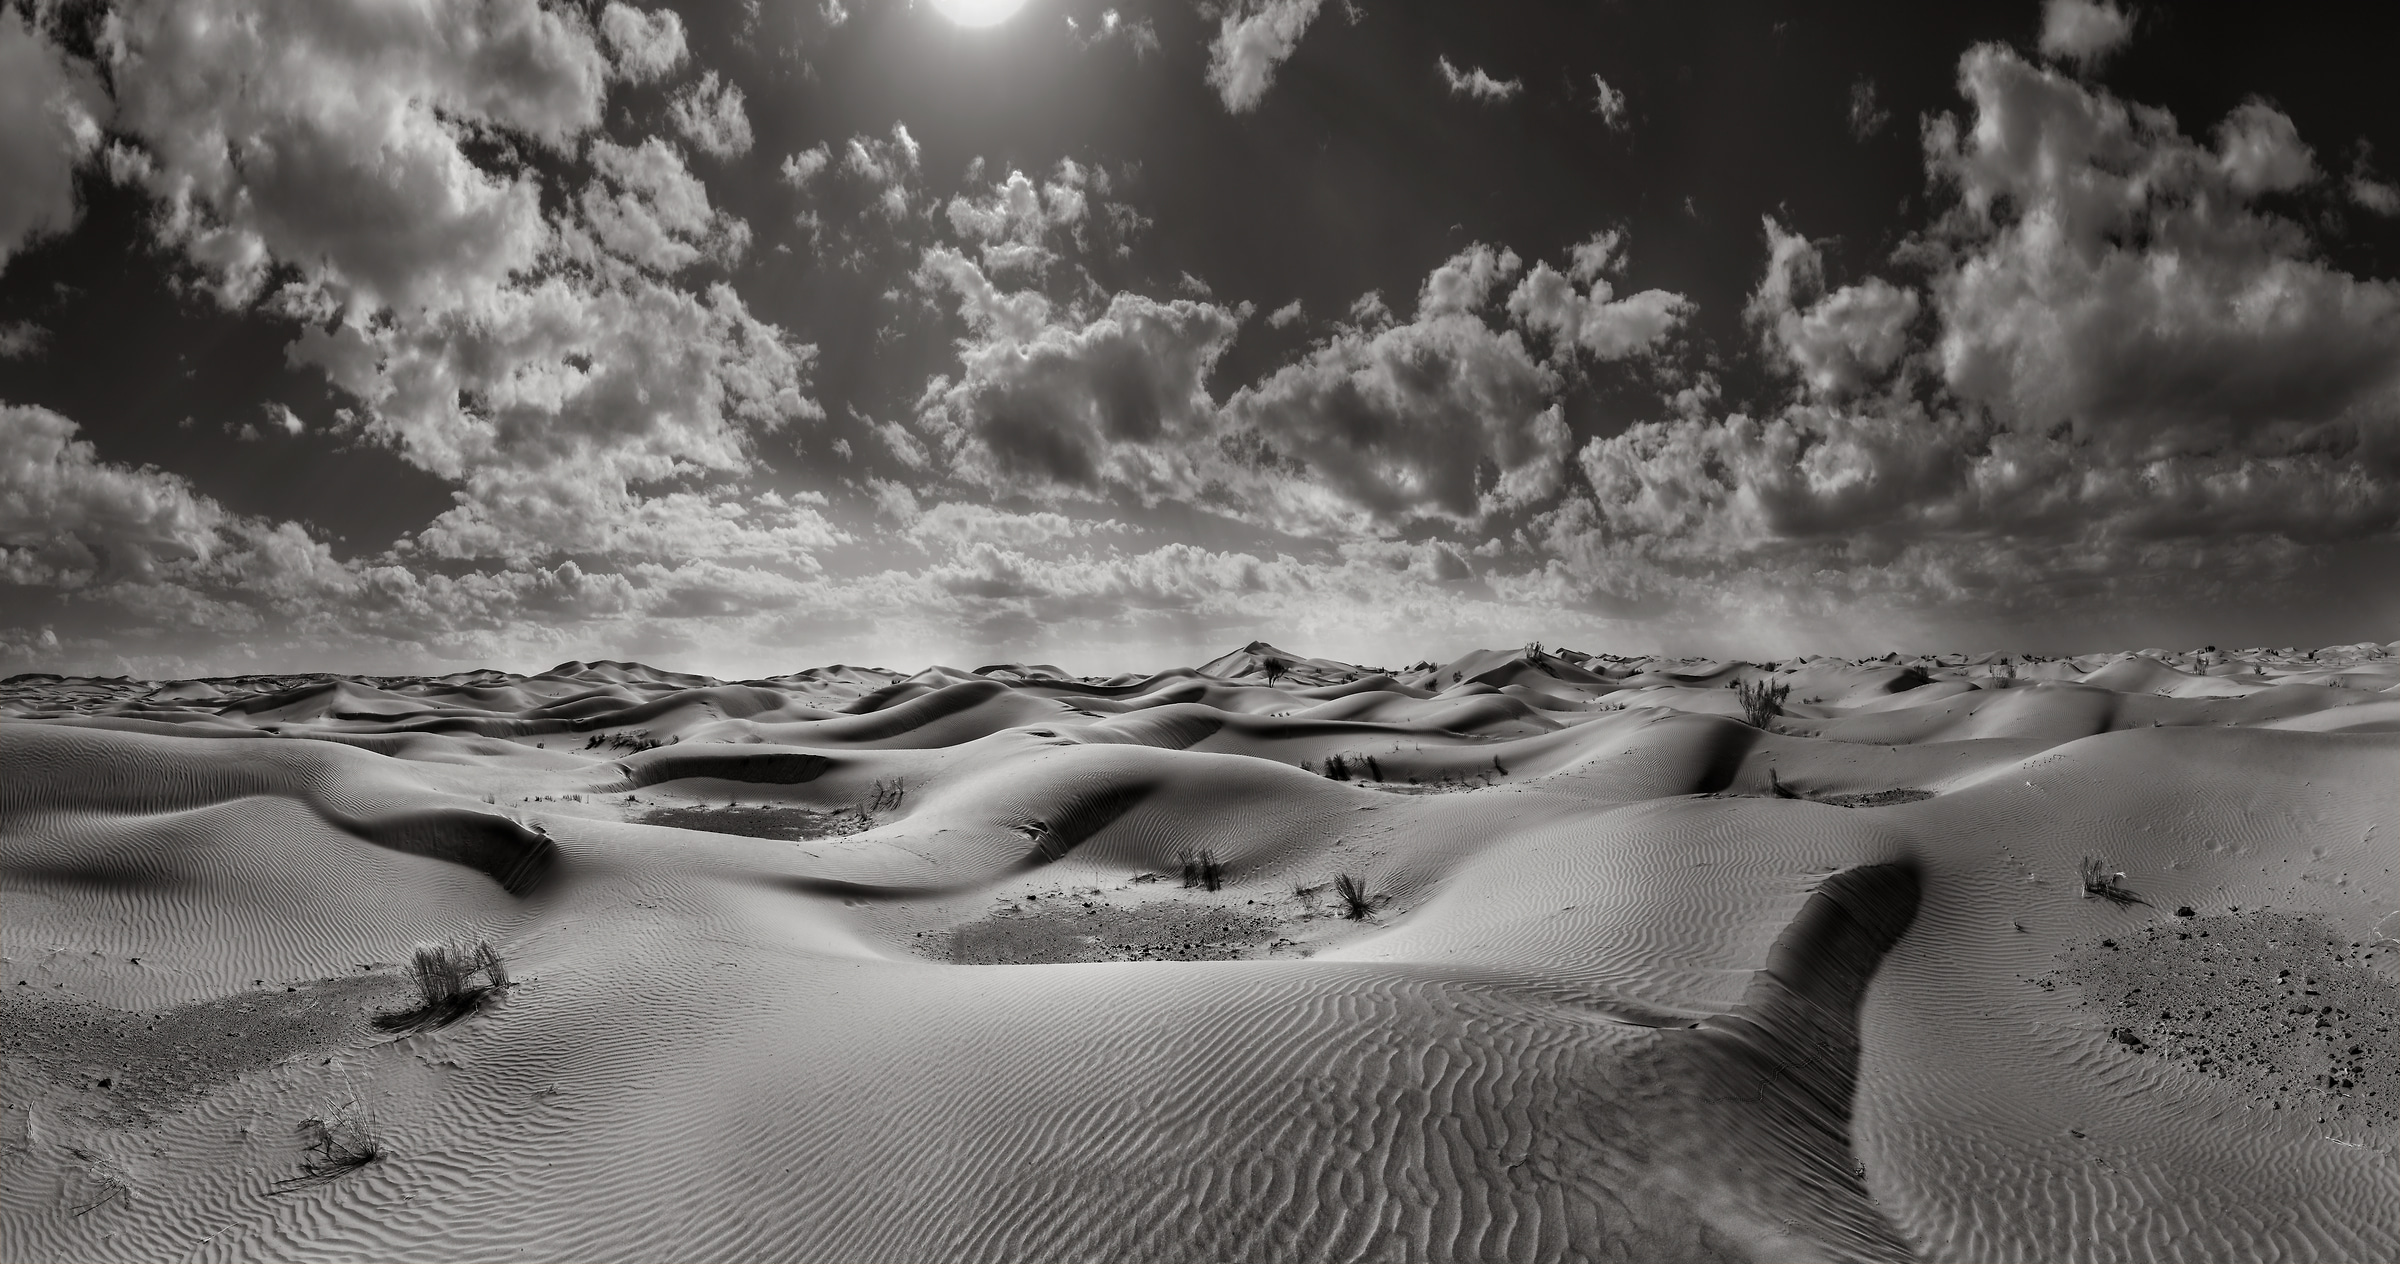 478 megapixels! A very high resolution, large-format, black & white photo of desert sand dunes in the Arabian Desert; fine art landscape photograph created by Peter Rodger in Tabuk Dunes, Tabuk, Saudi Arabia.